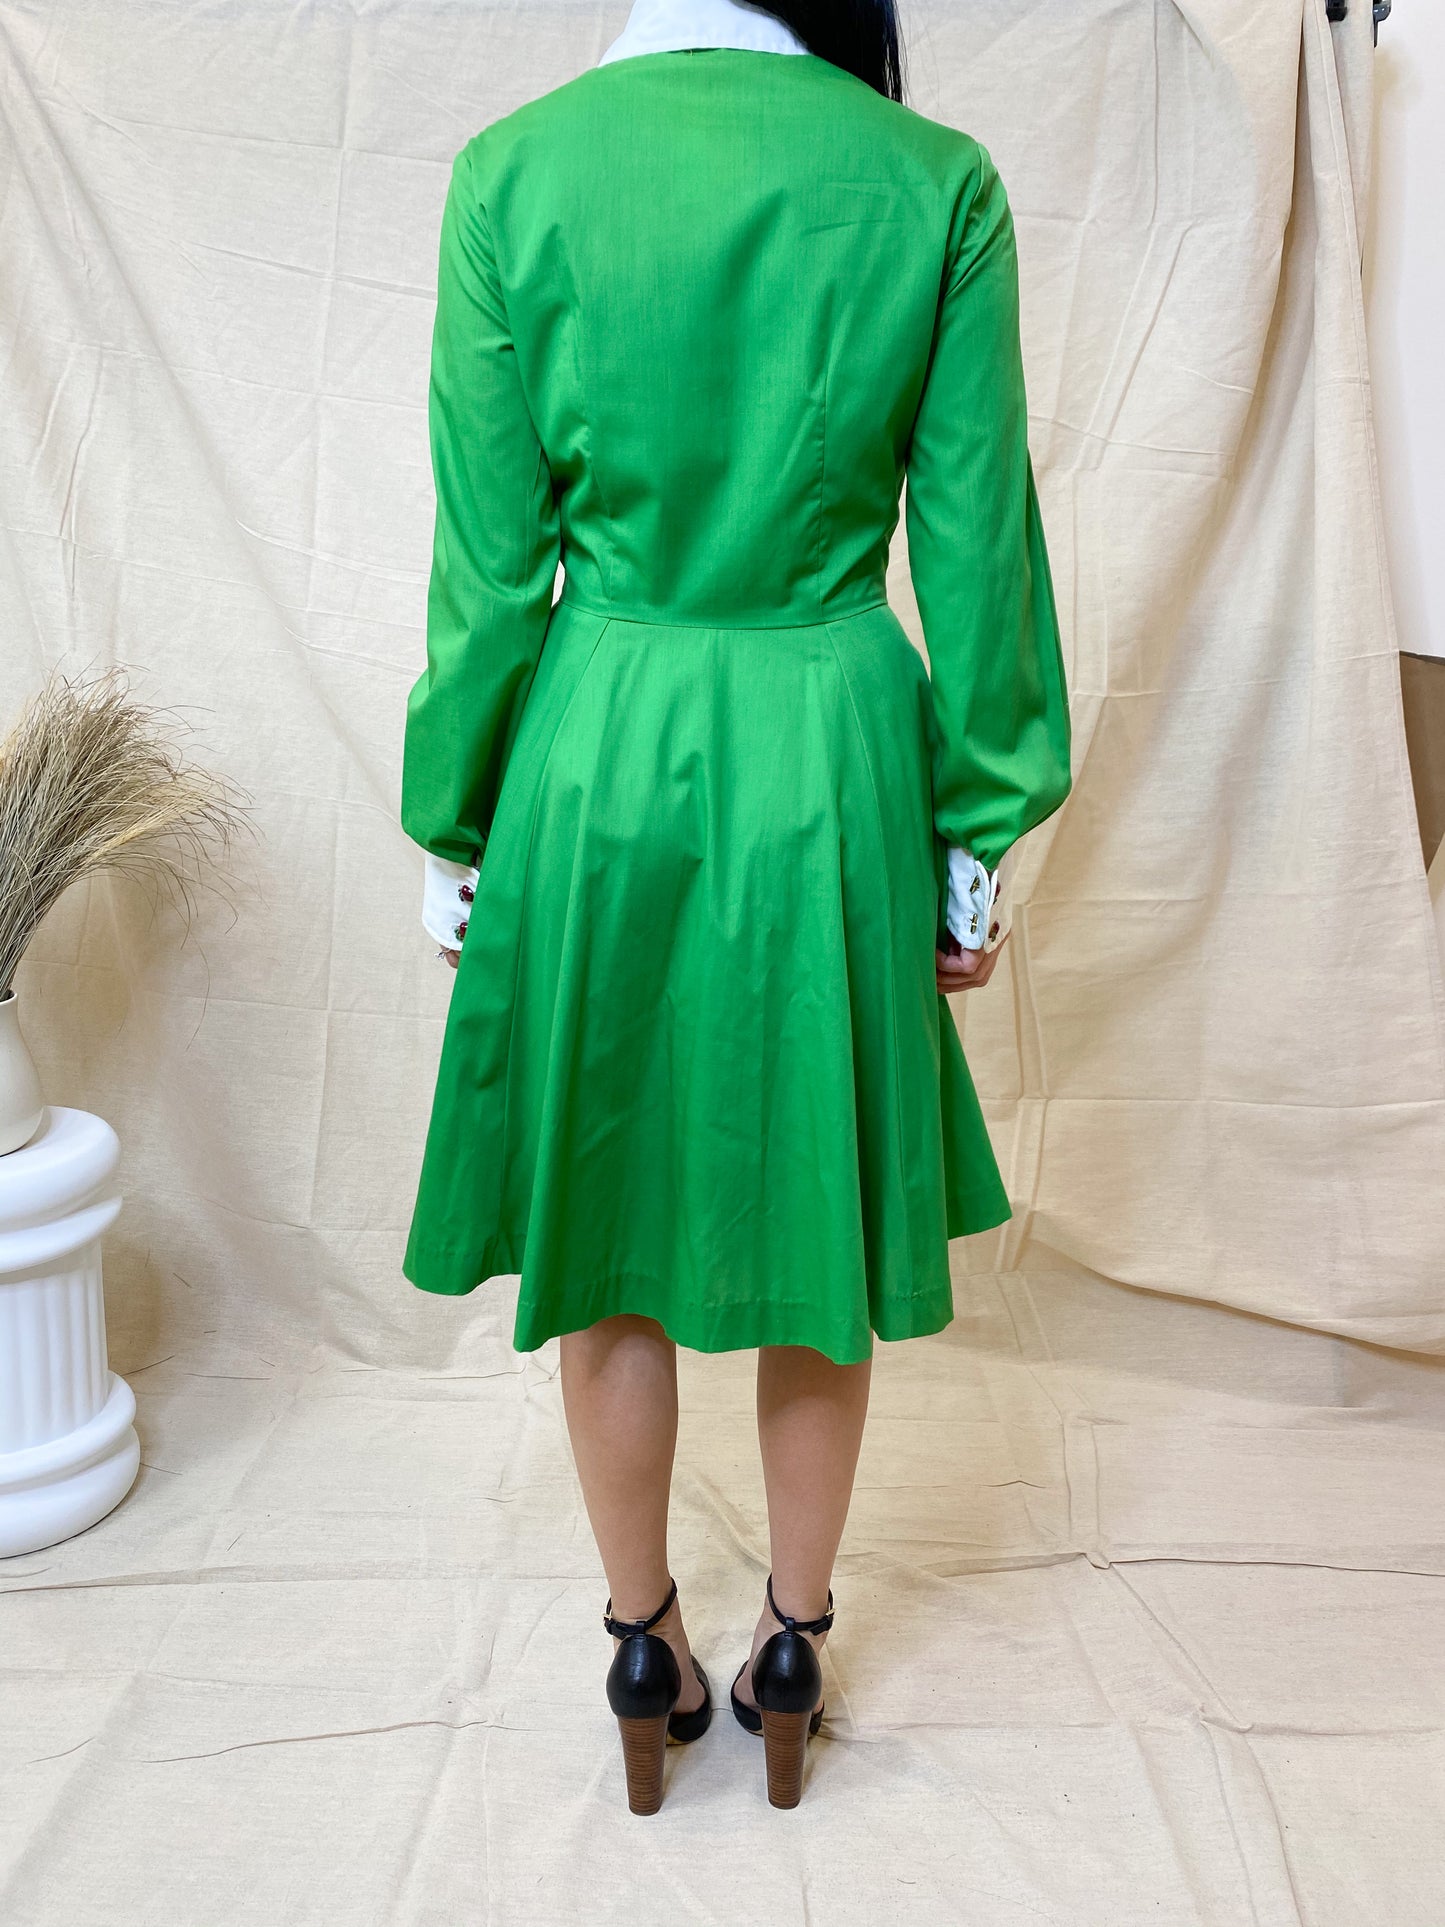 The Apple Dress, 1960's